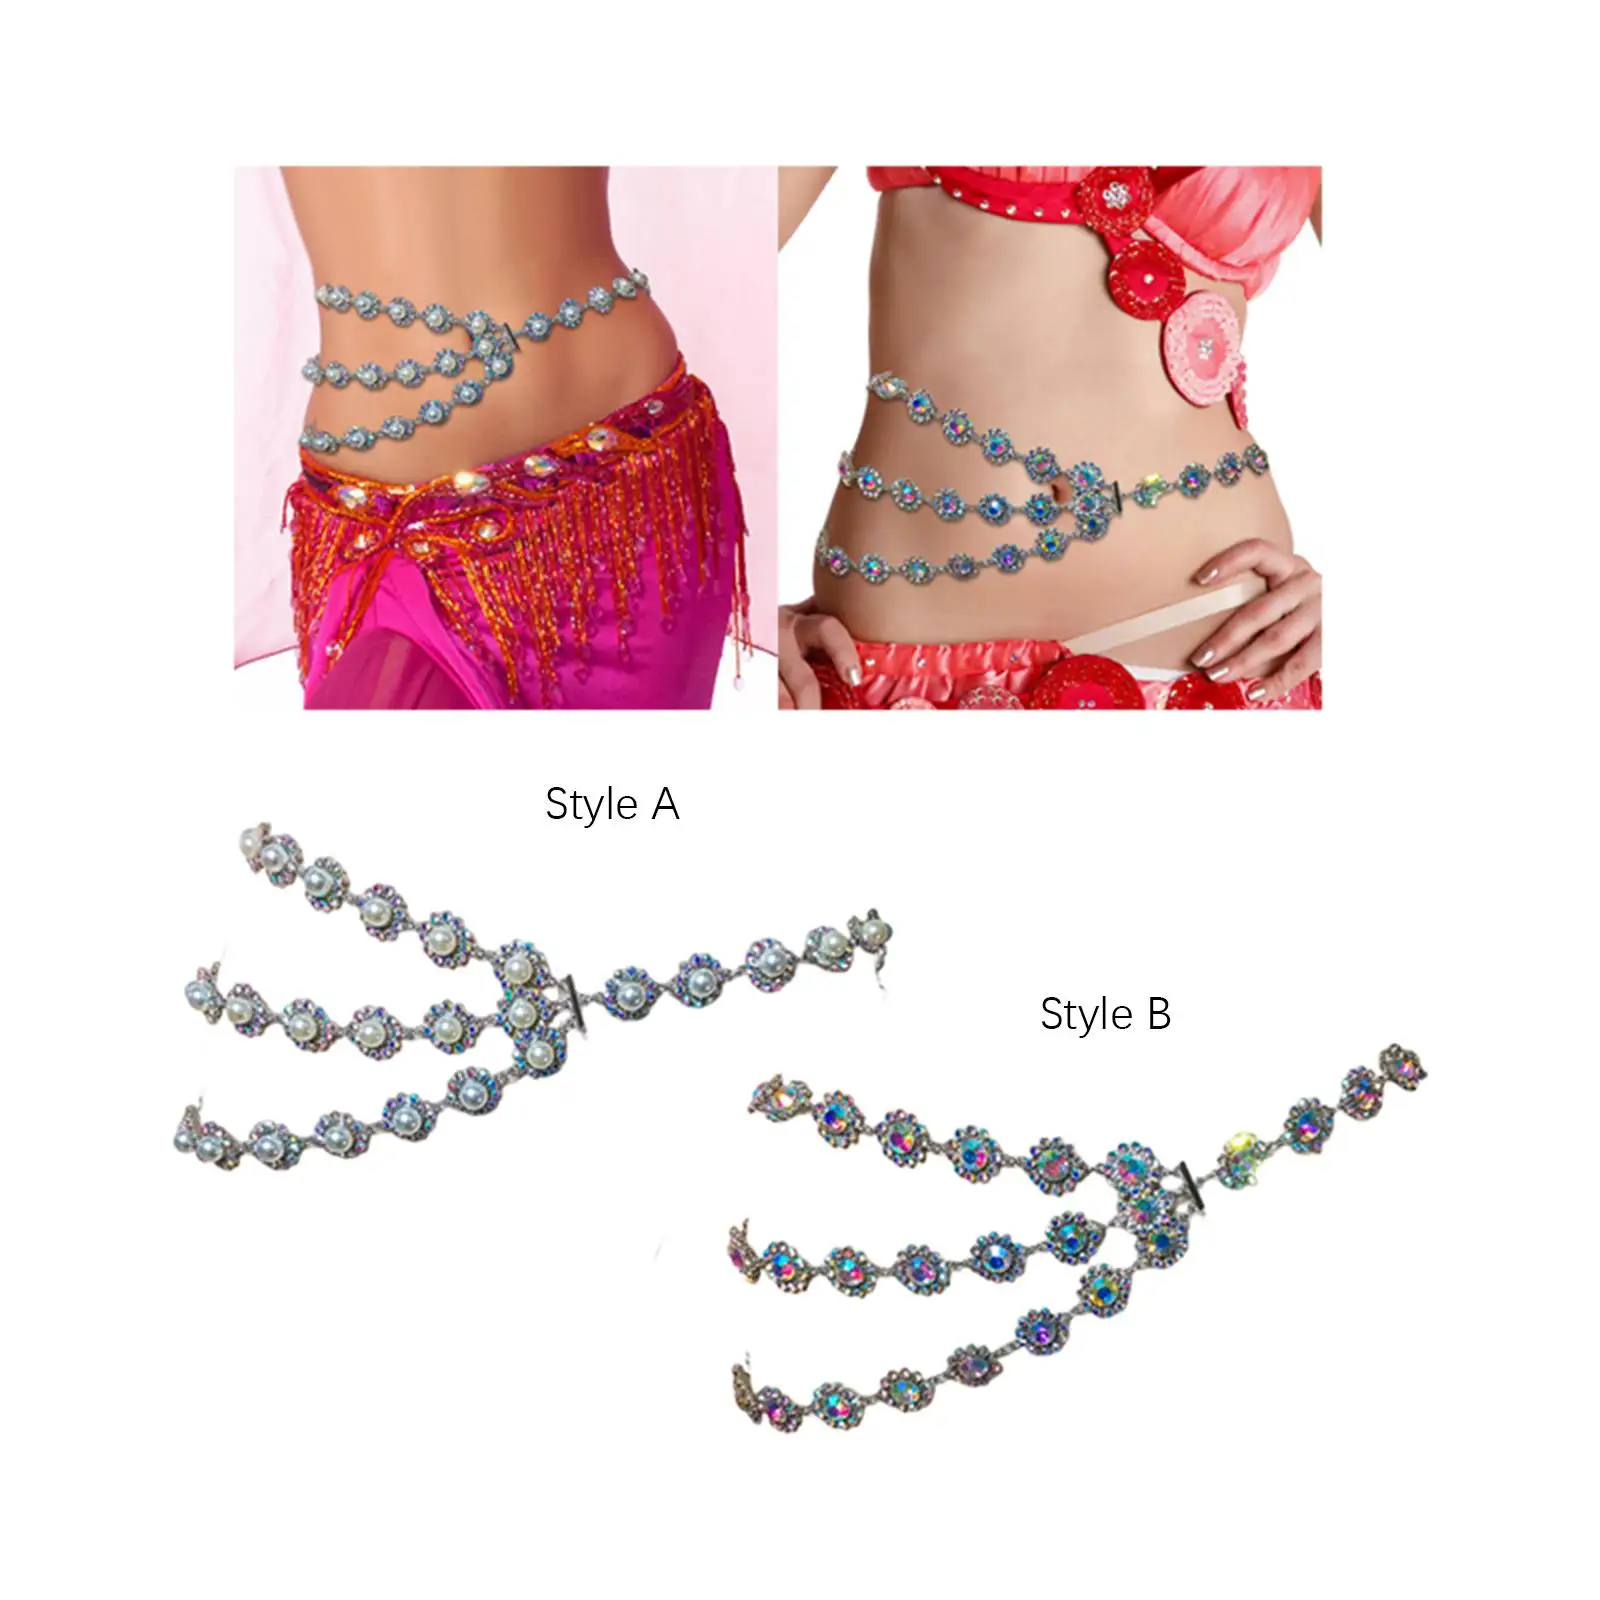 Waist Chain Costume Accessories Jewelry Gifts Rhinestone Belly Chains Summer Beach Chain for Bikinis Party Dress Women Girls